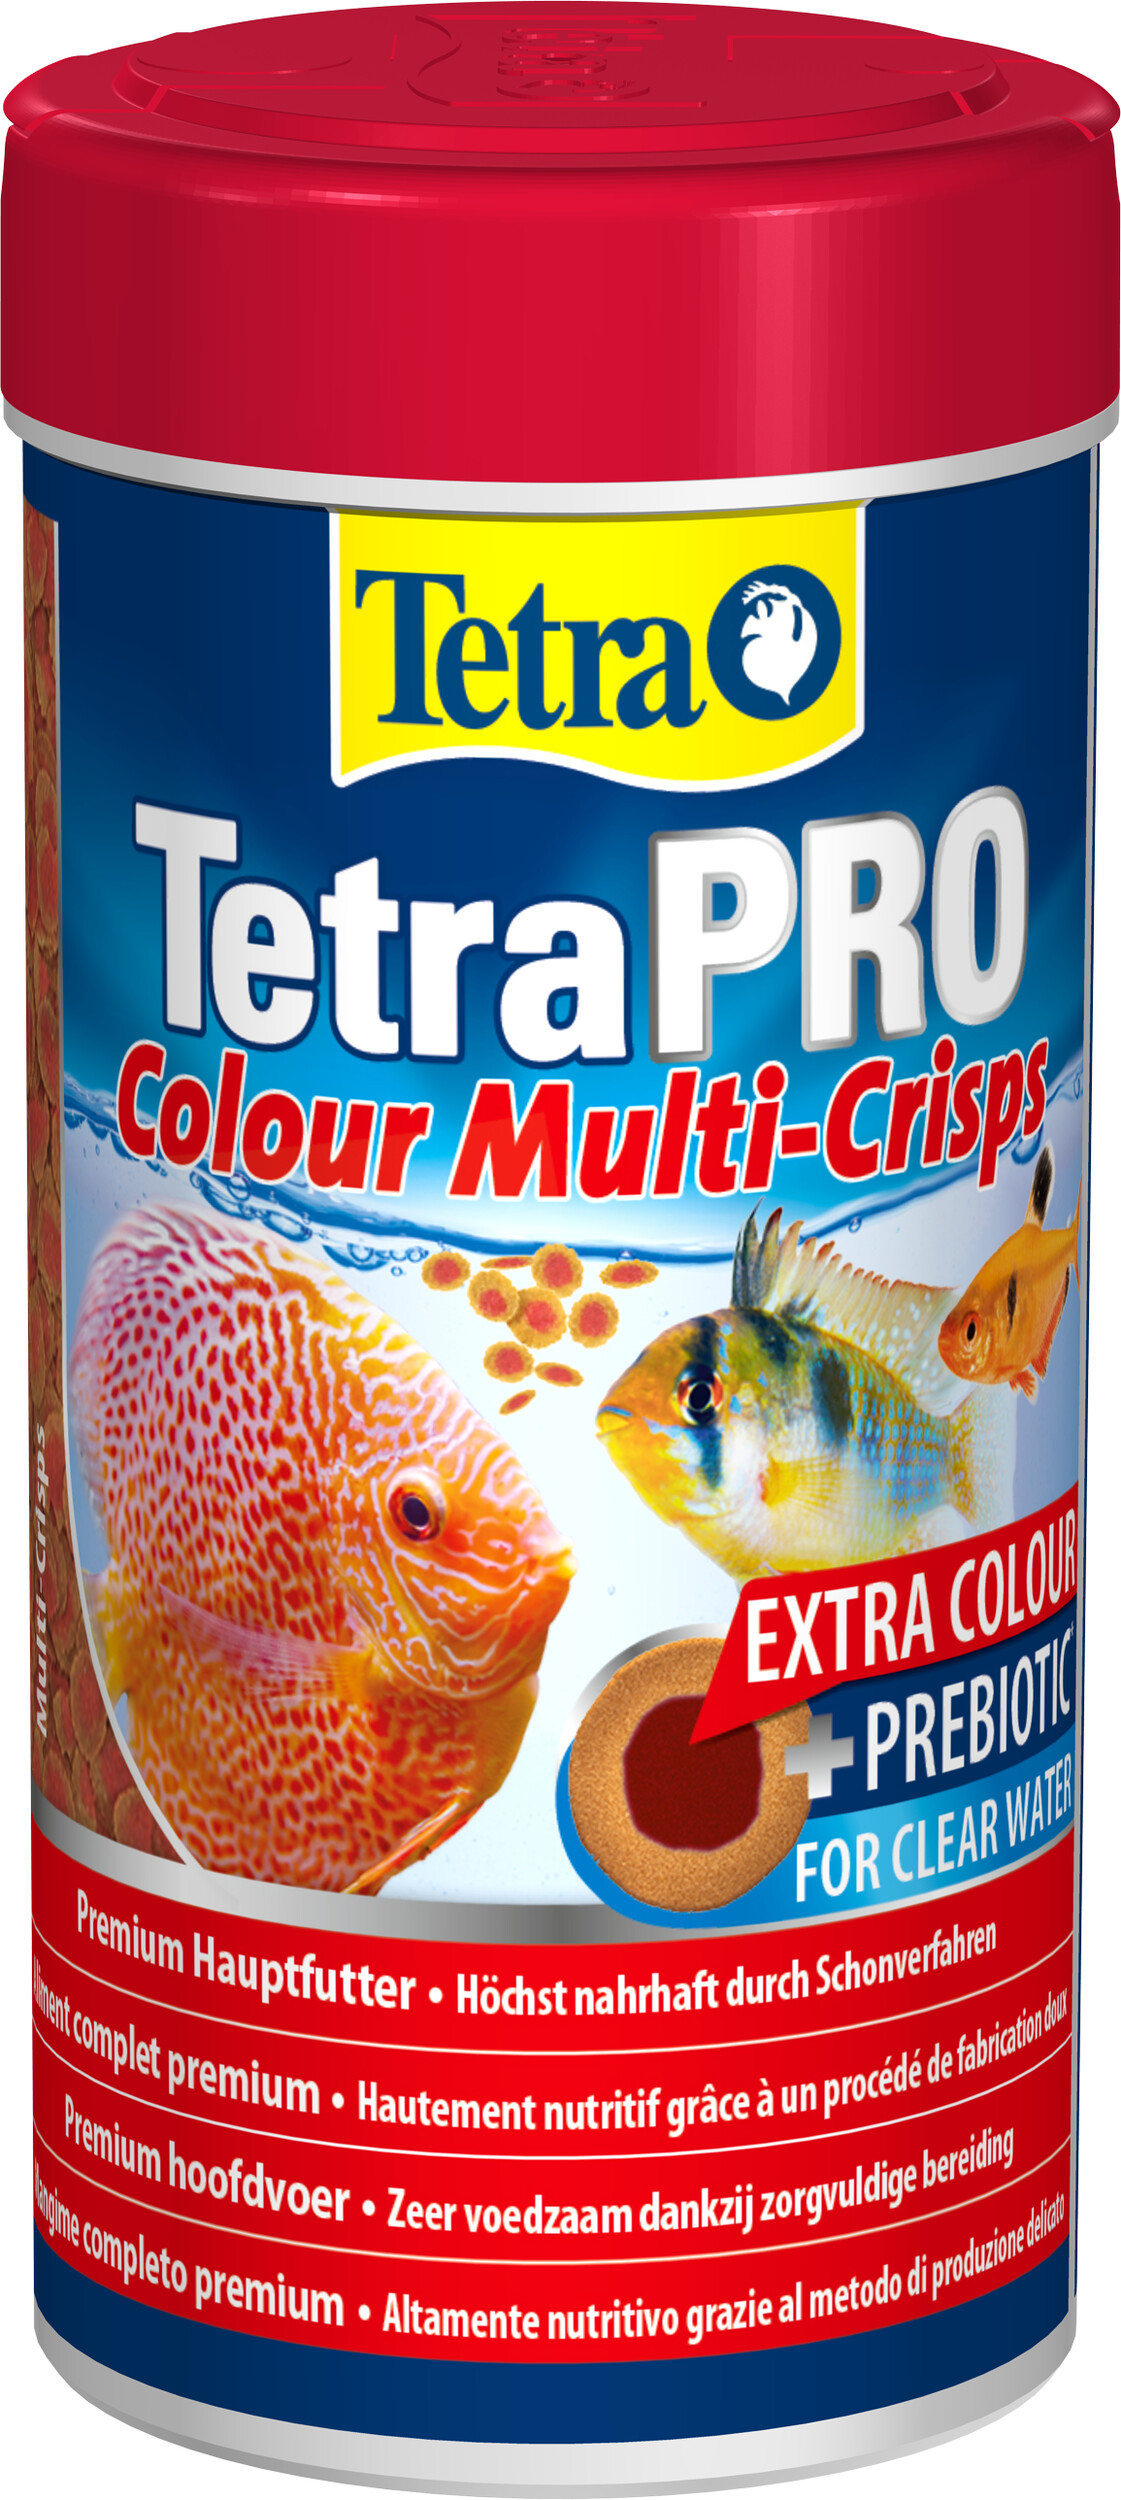 TetraPRO+Colour+Multi-Crisps